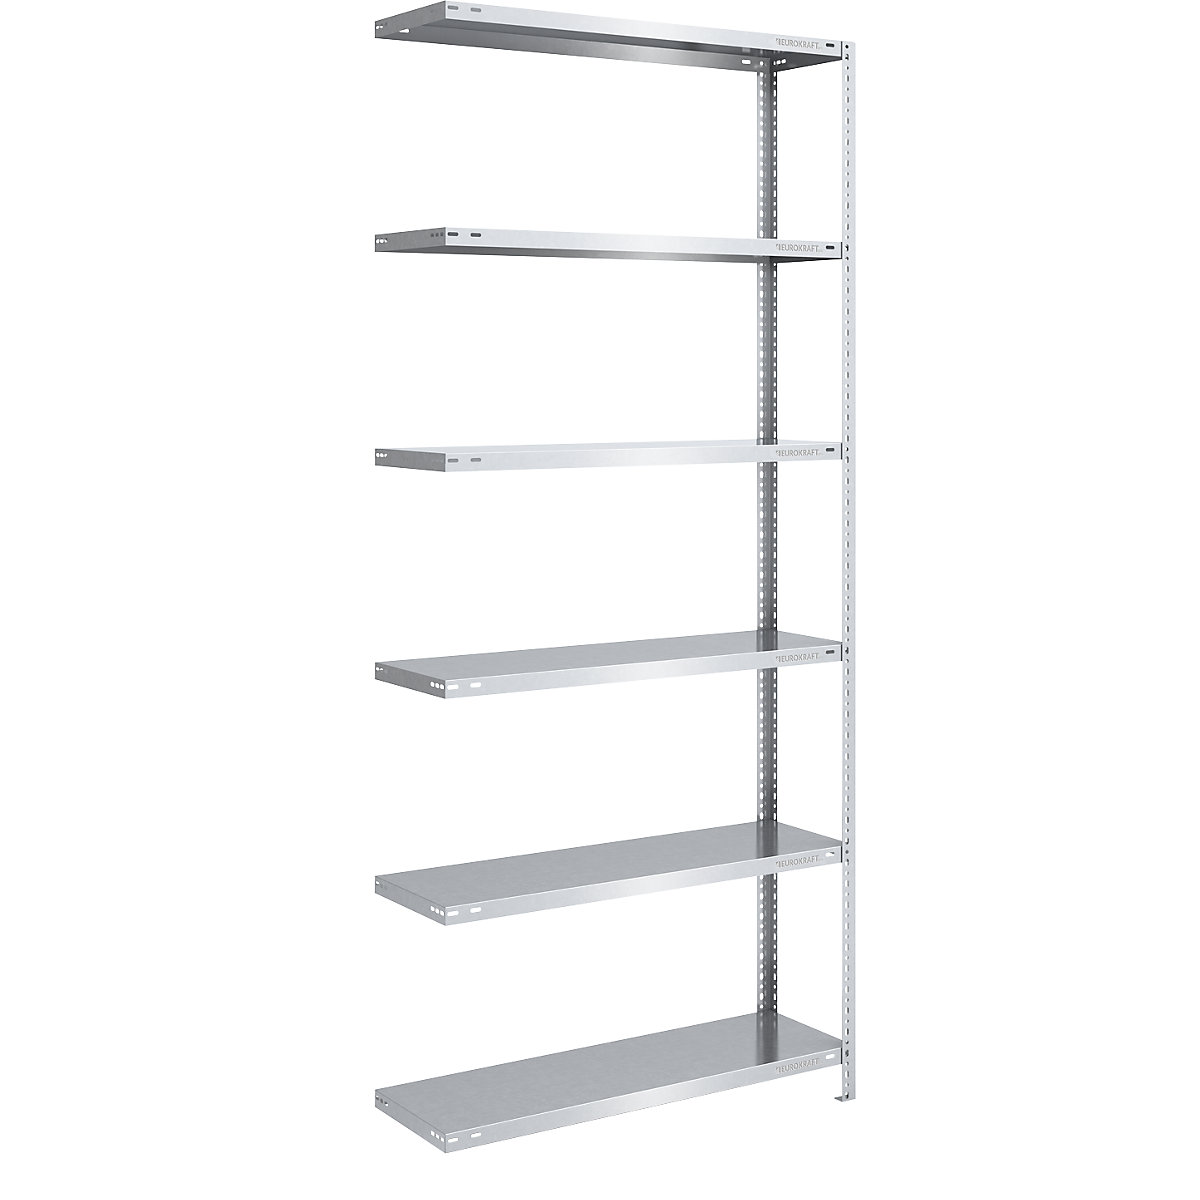 Bolt-together storage shelving, zinc plated, medium duty – eurokraft pro, shelf unit height 2500 mm, shelf width 1000 mm, depth 400 mm, extension shelf unit-5